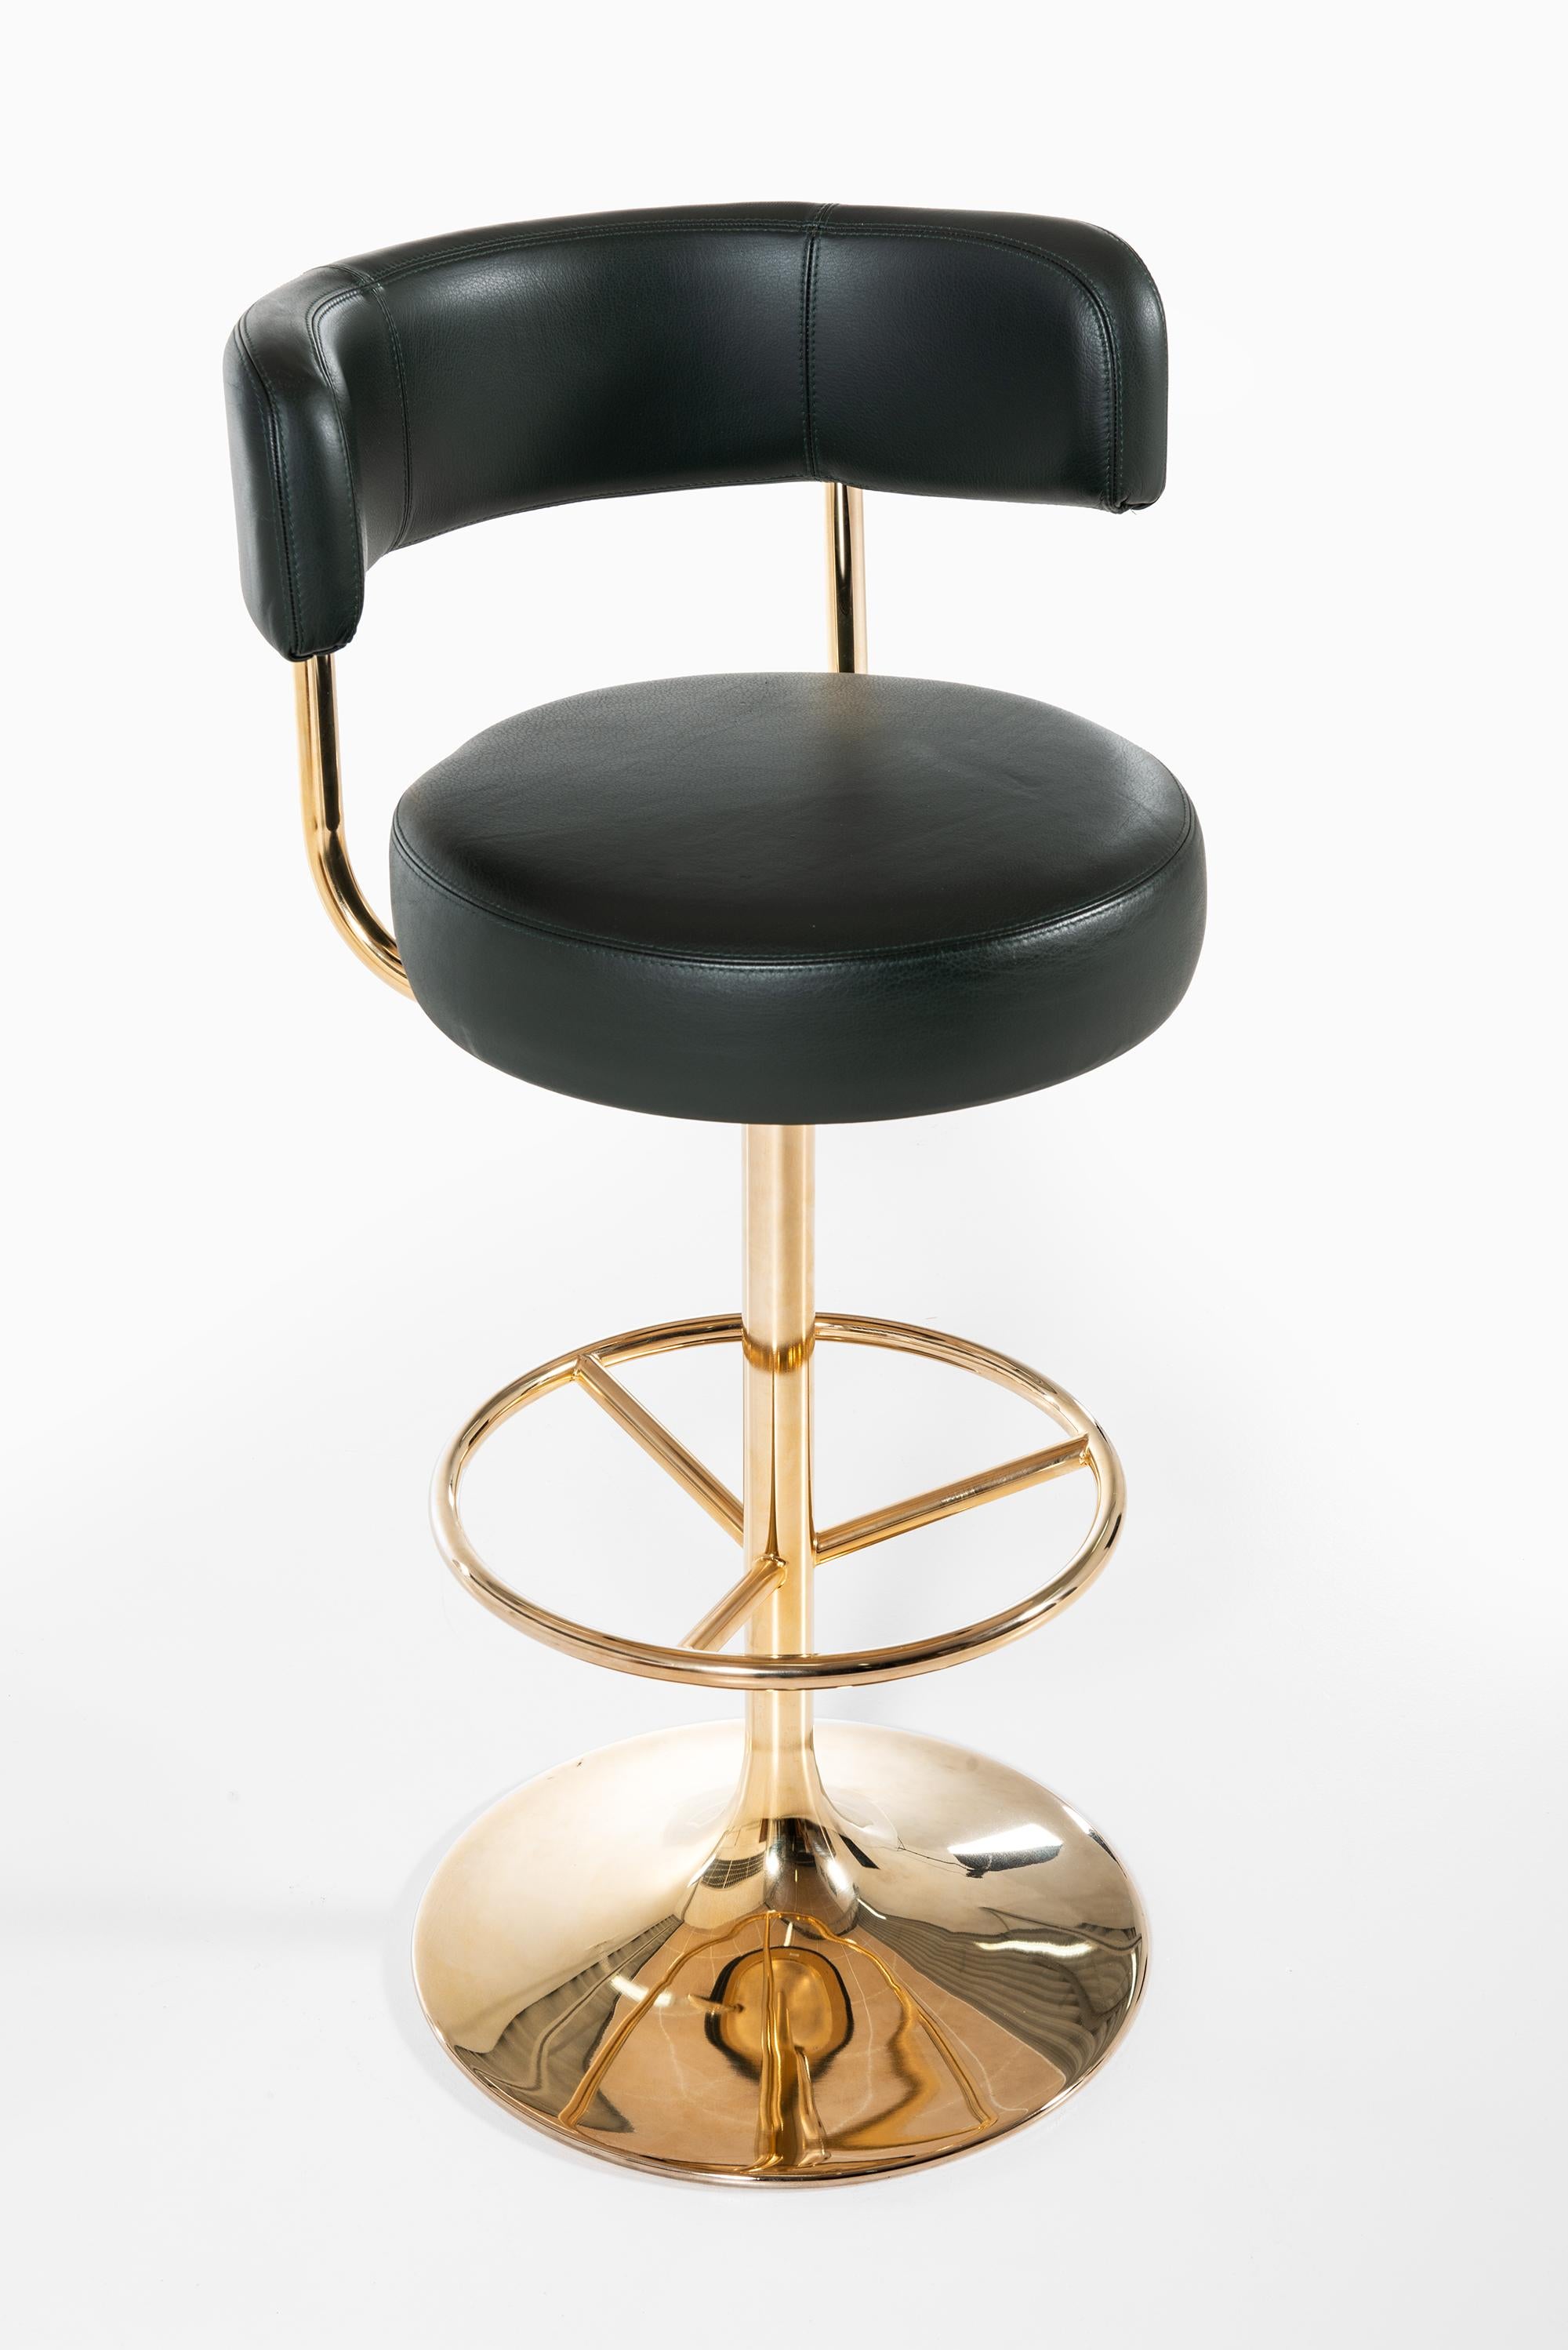 Bar stools designed by Börje Johanson. Produced by Johanson design in Markaryd, Sweden.